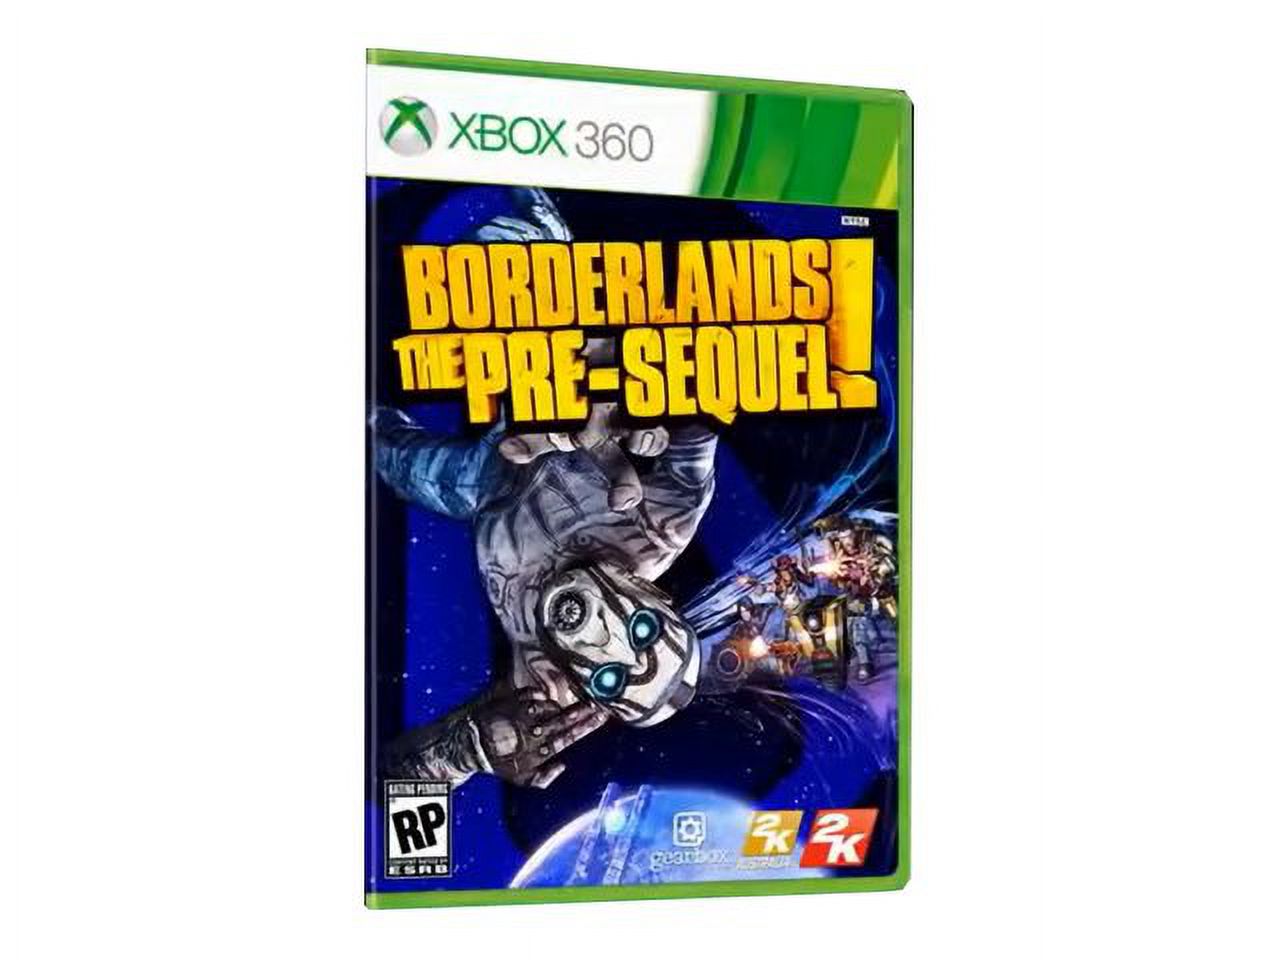 Borderlands Pre-Sequel (Pre-Owned), 2K, PC, 886162530100 - image 3 of 3